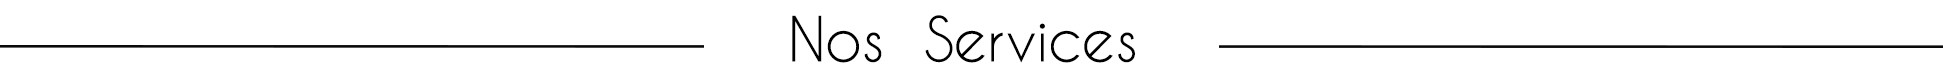 -- Services --